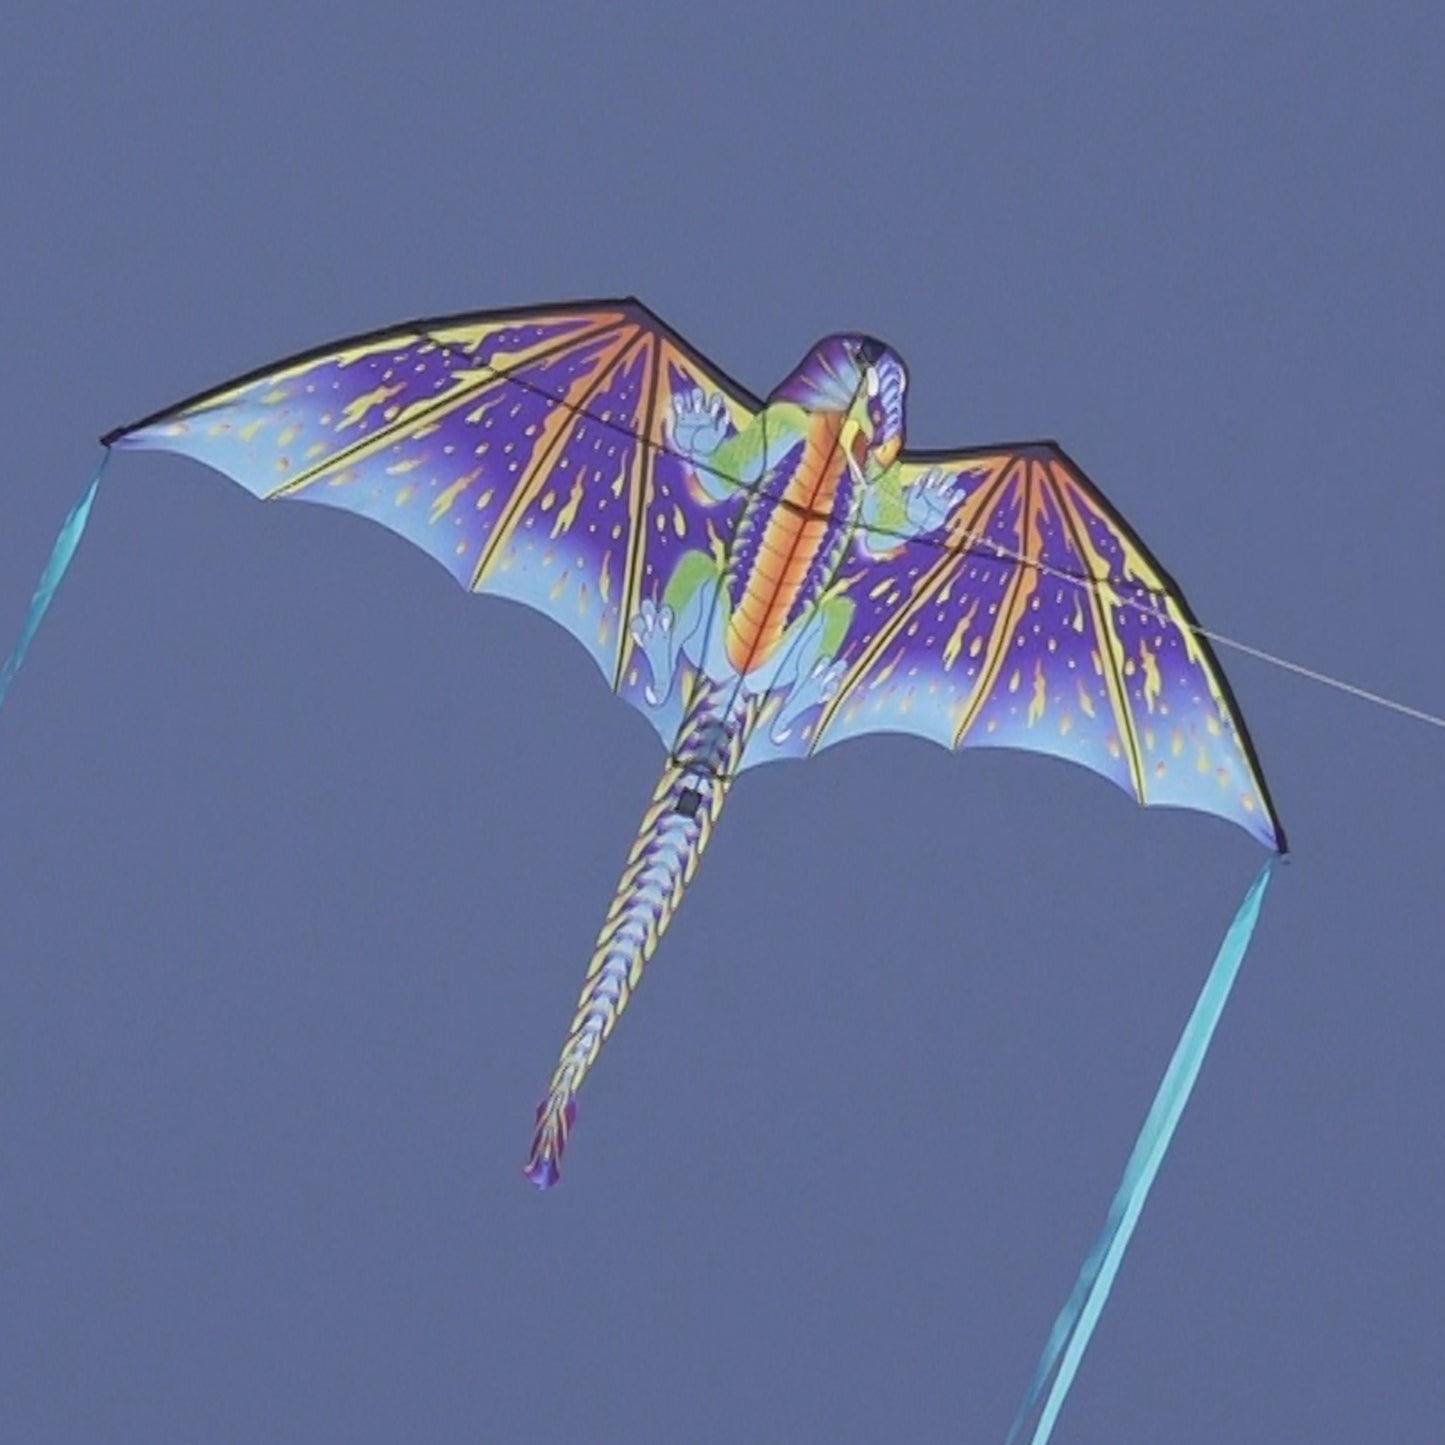 WindNSun SuperSize 2-D Blue Dragon Ripstop Nylon Dragon Kite photo of product in use